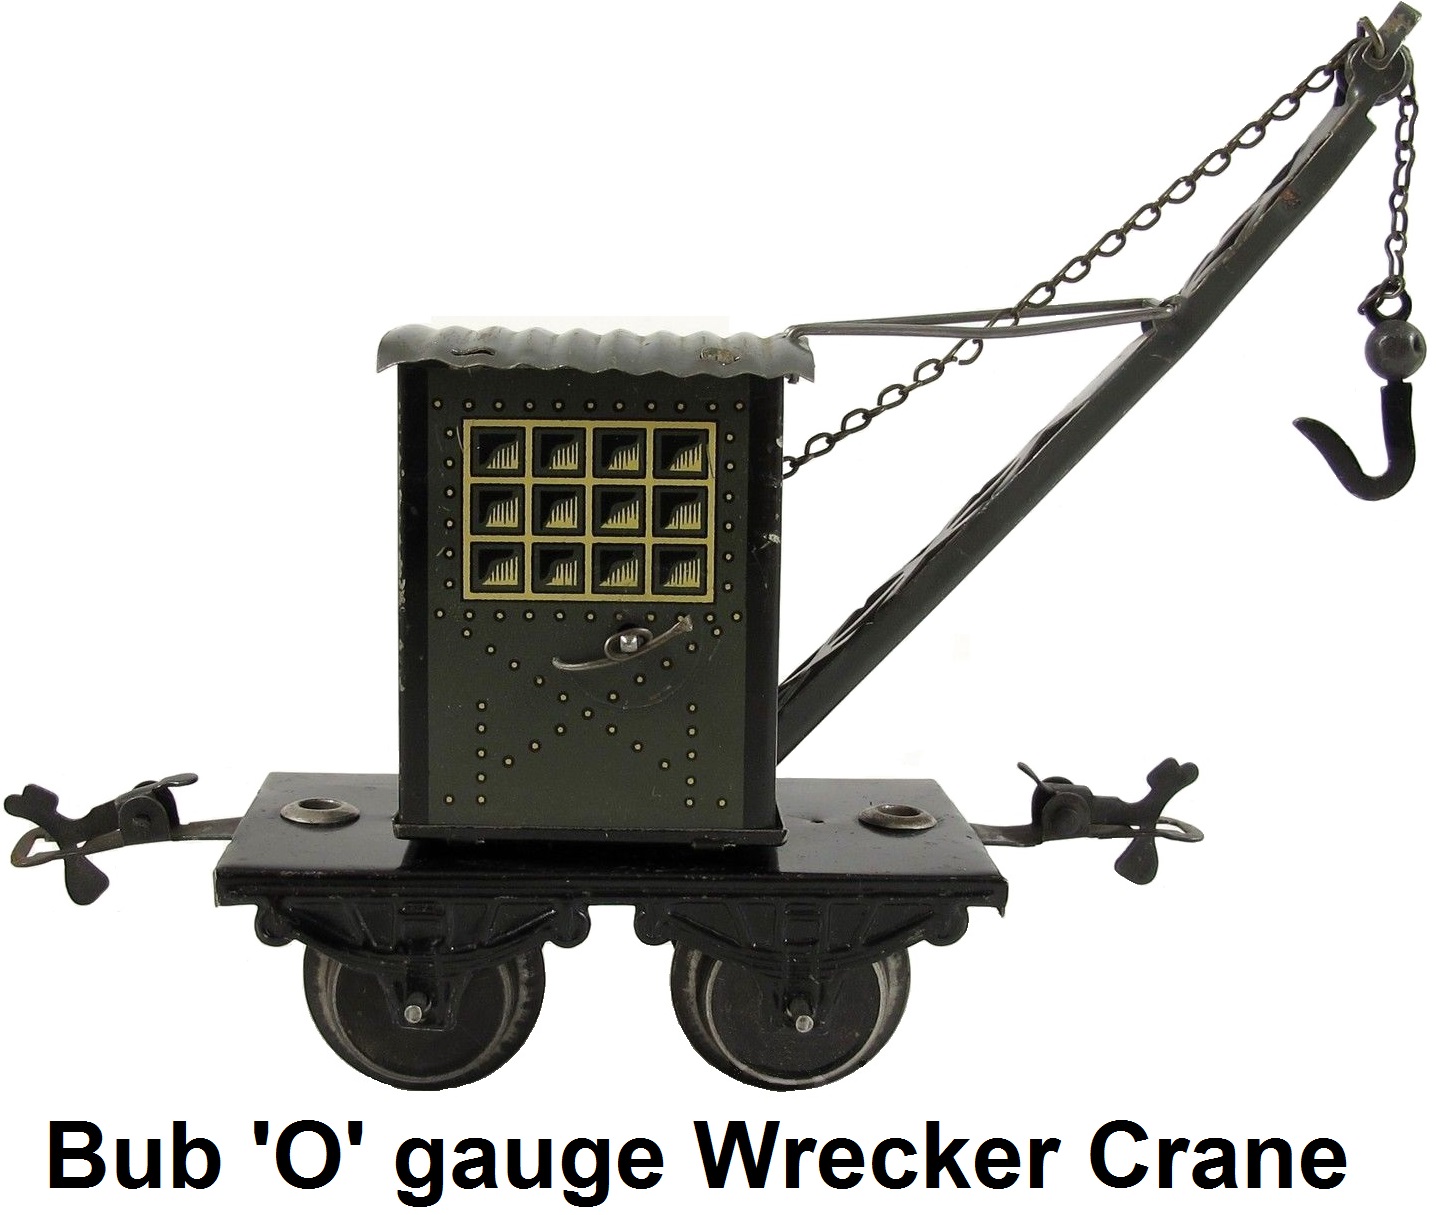 Bub 'O' gauge wrecker crane